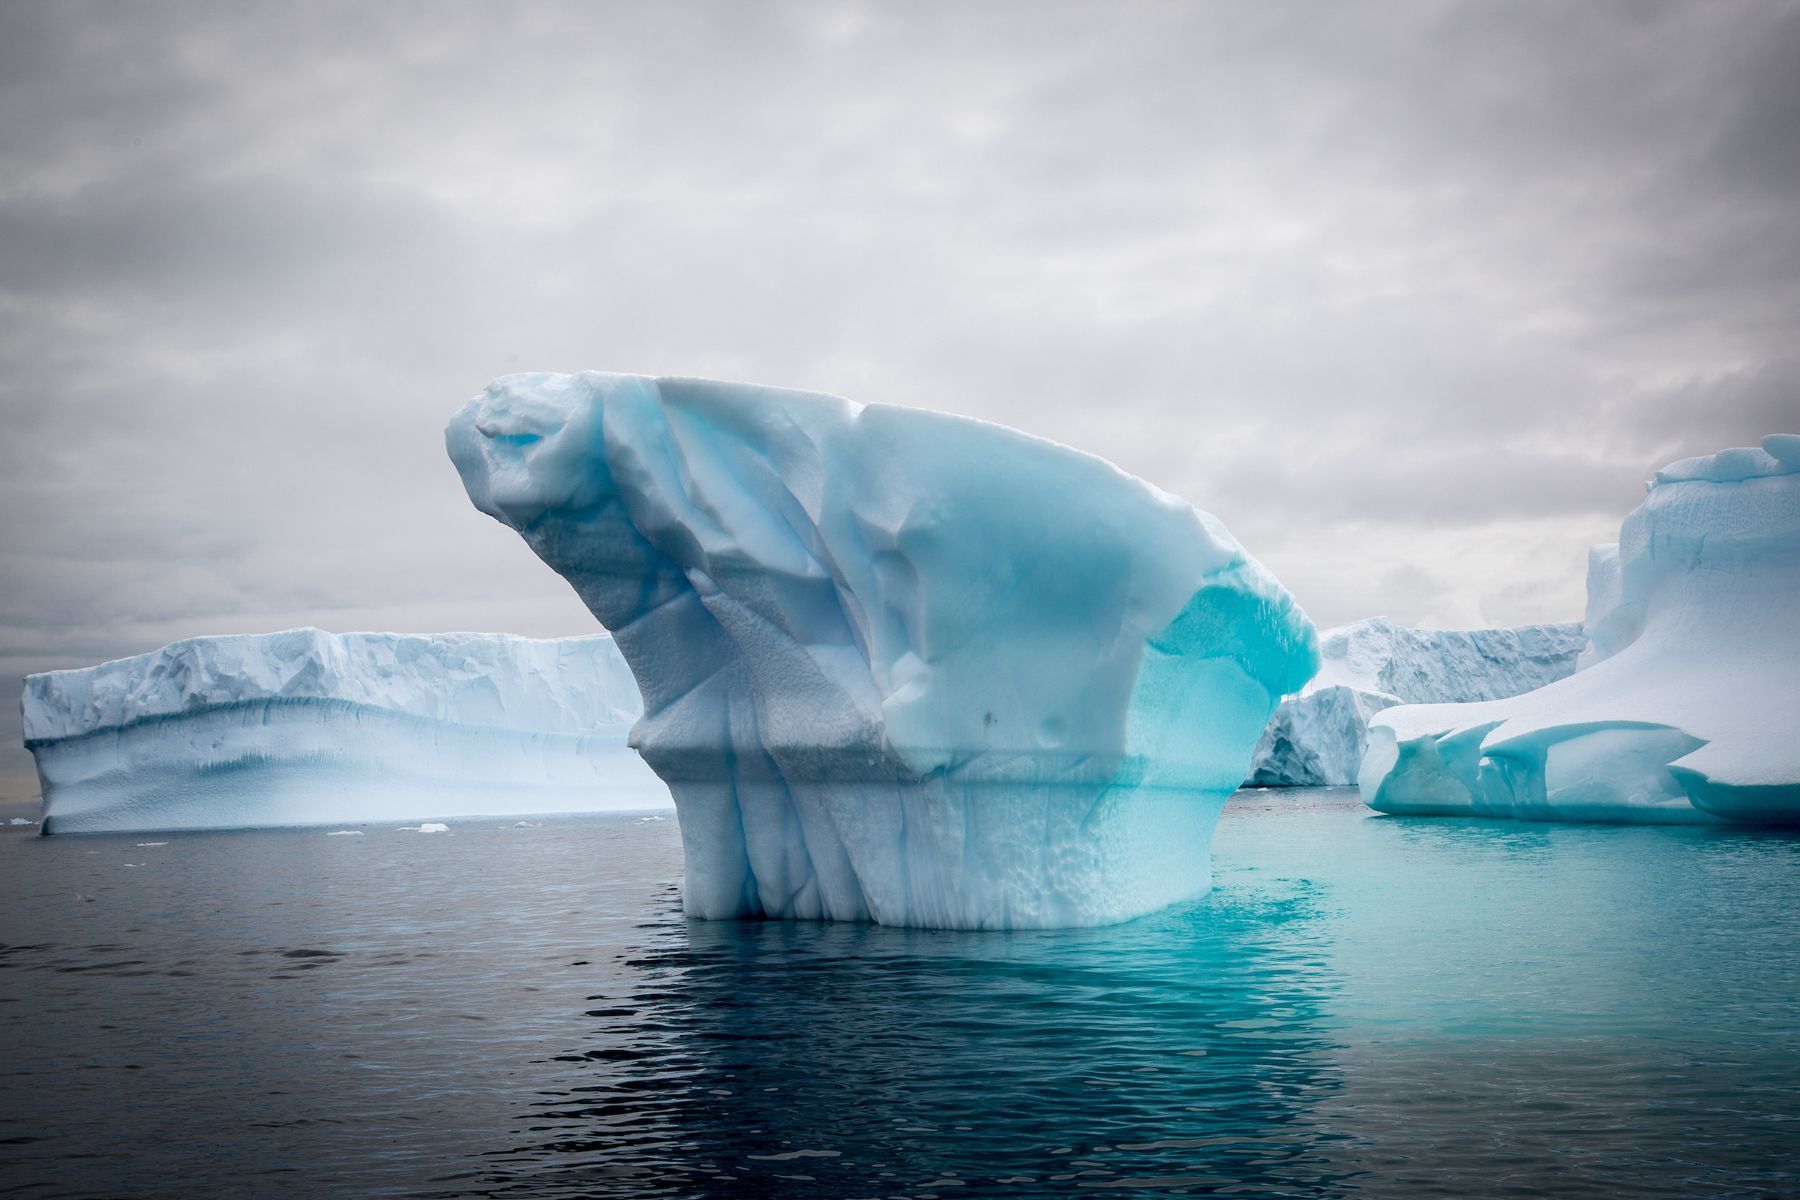 Blue icebergs are commonplace in Antarctica